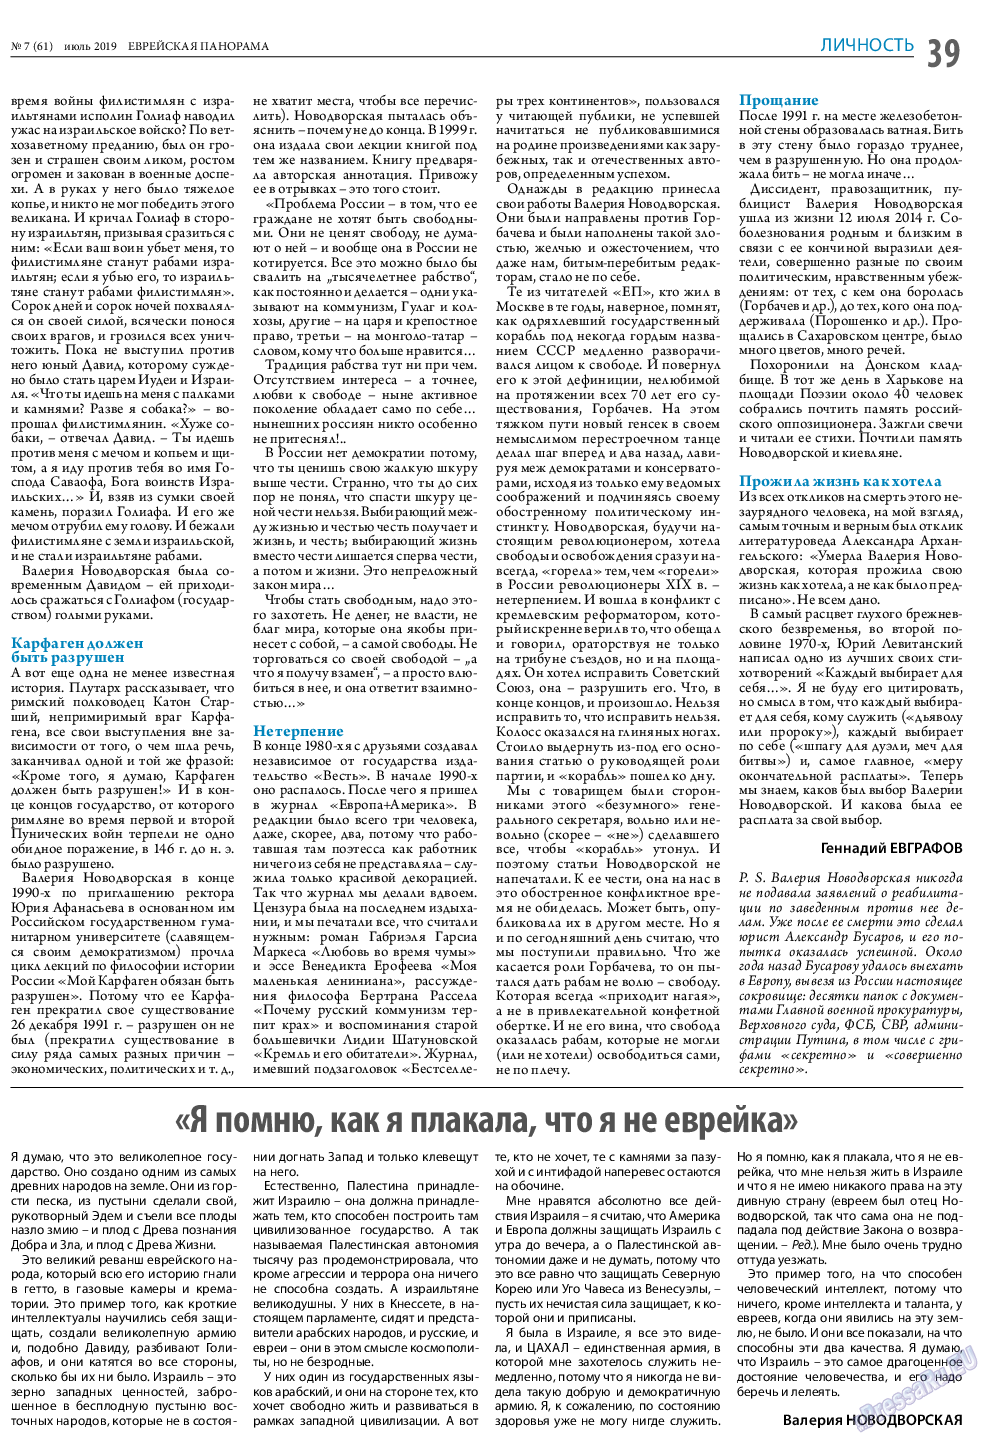 Еврейская панорама, газета. 2019 №7 стр.39